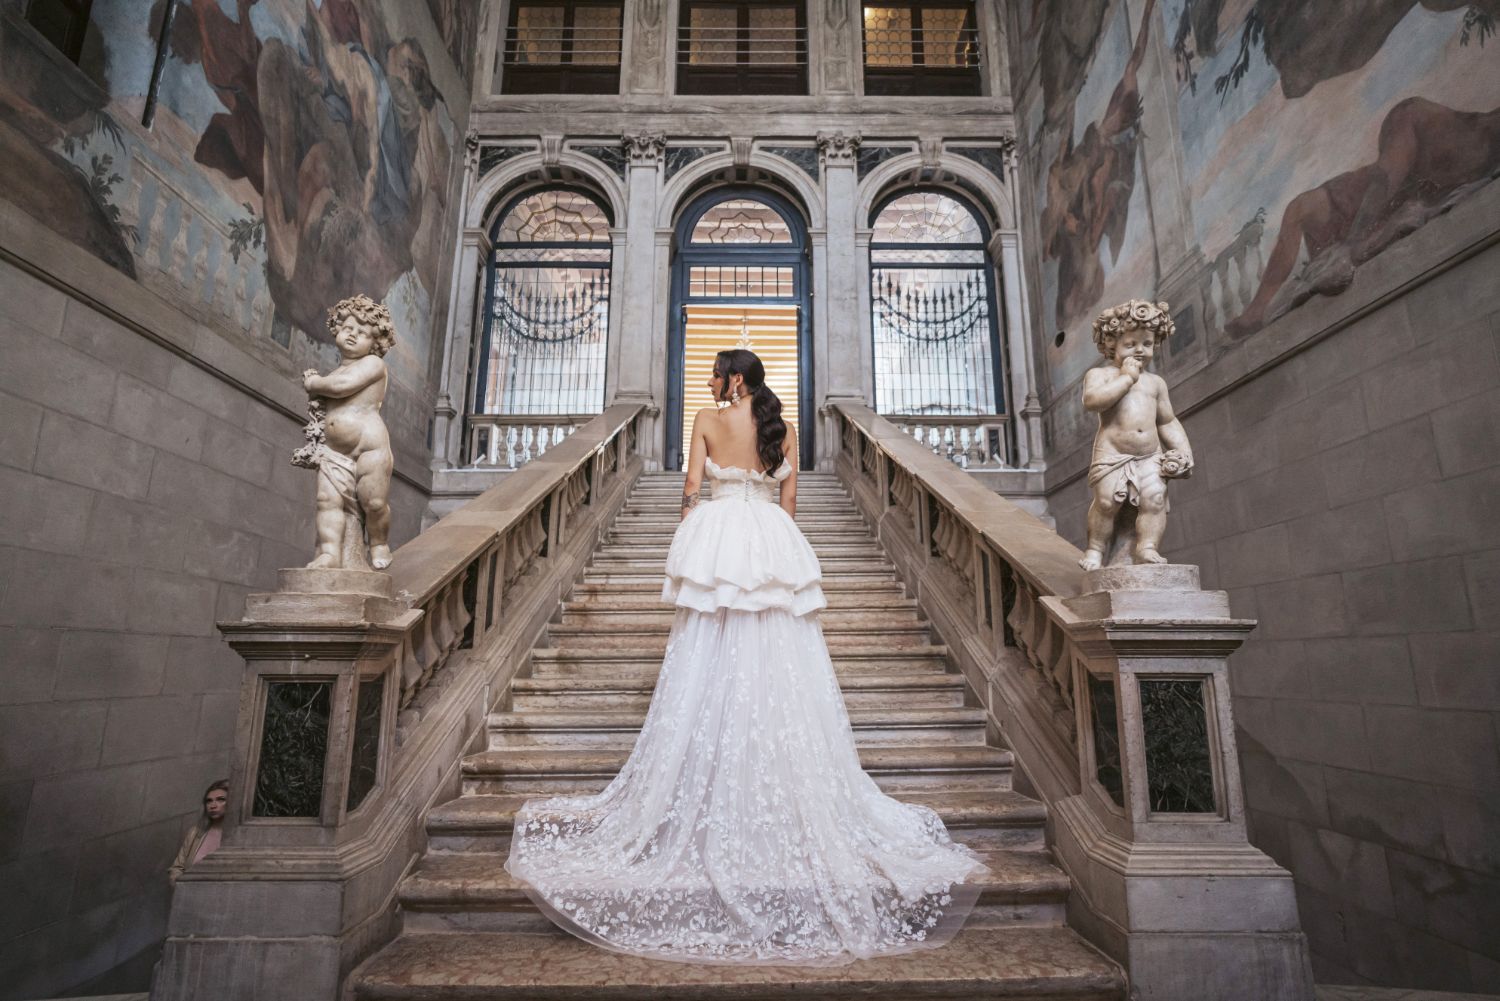 Destination wedding editorial with Rime Arodaky dress at Ca Sagredo in Venice Italy